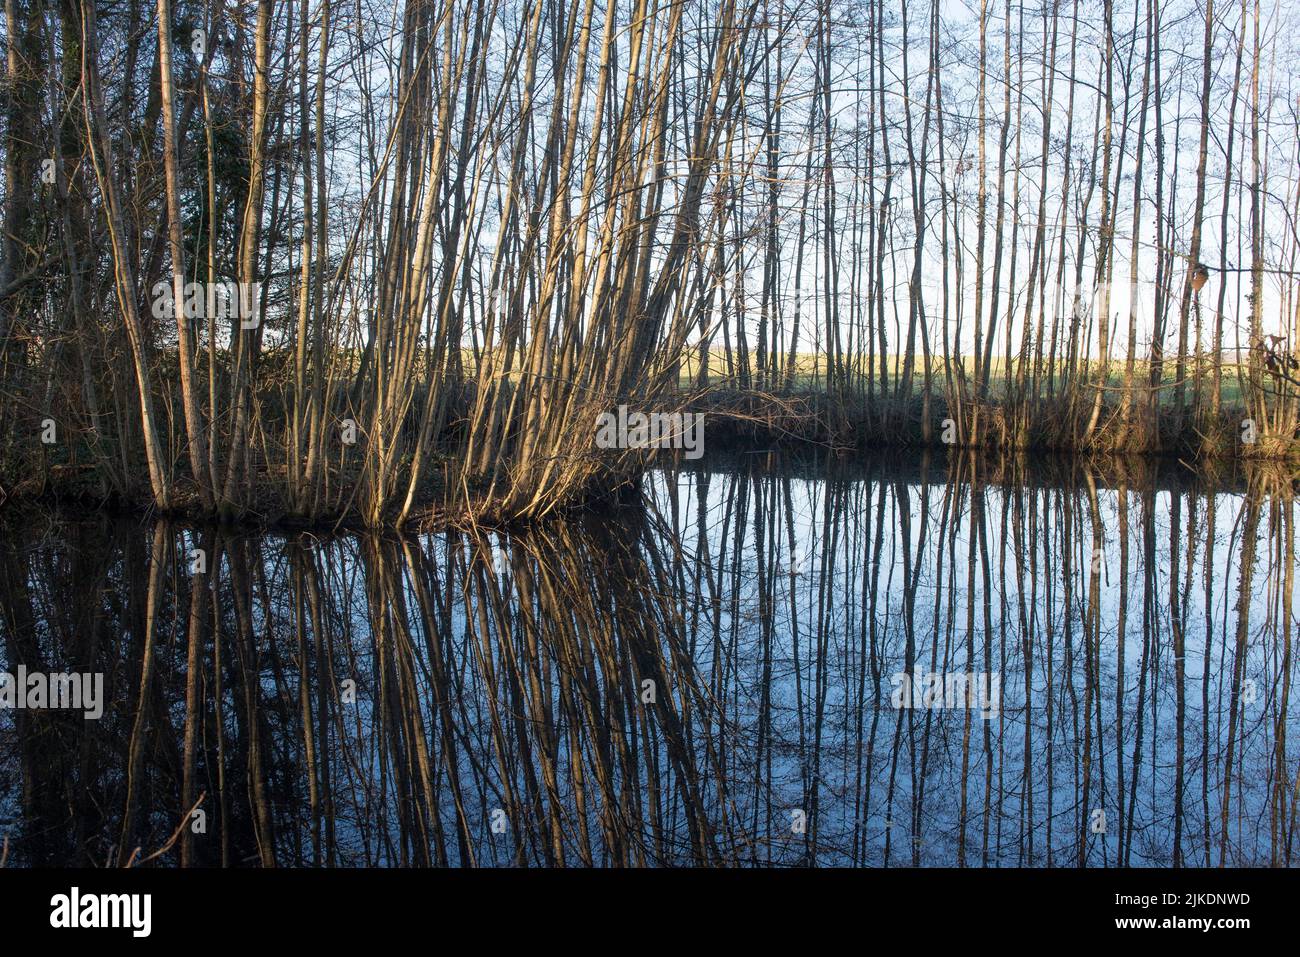 Pond surrounded by young trees, Eure-et-Loir department, Centre-Val-de-Loire region, France, Europe. Stock Photo